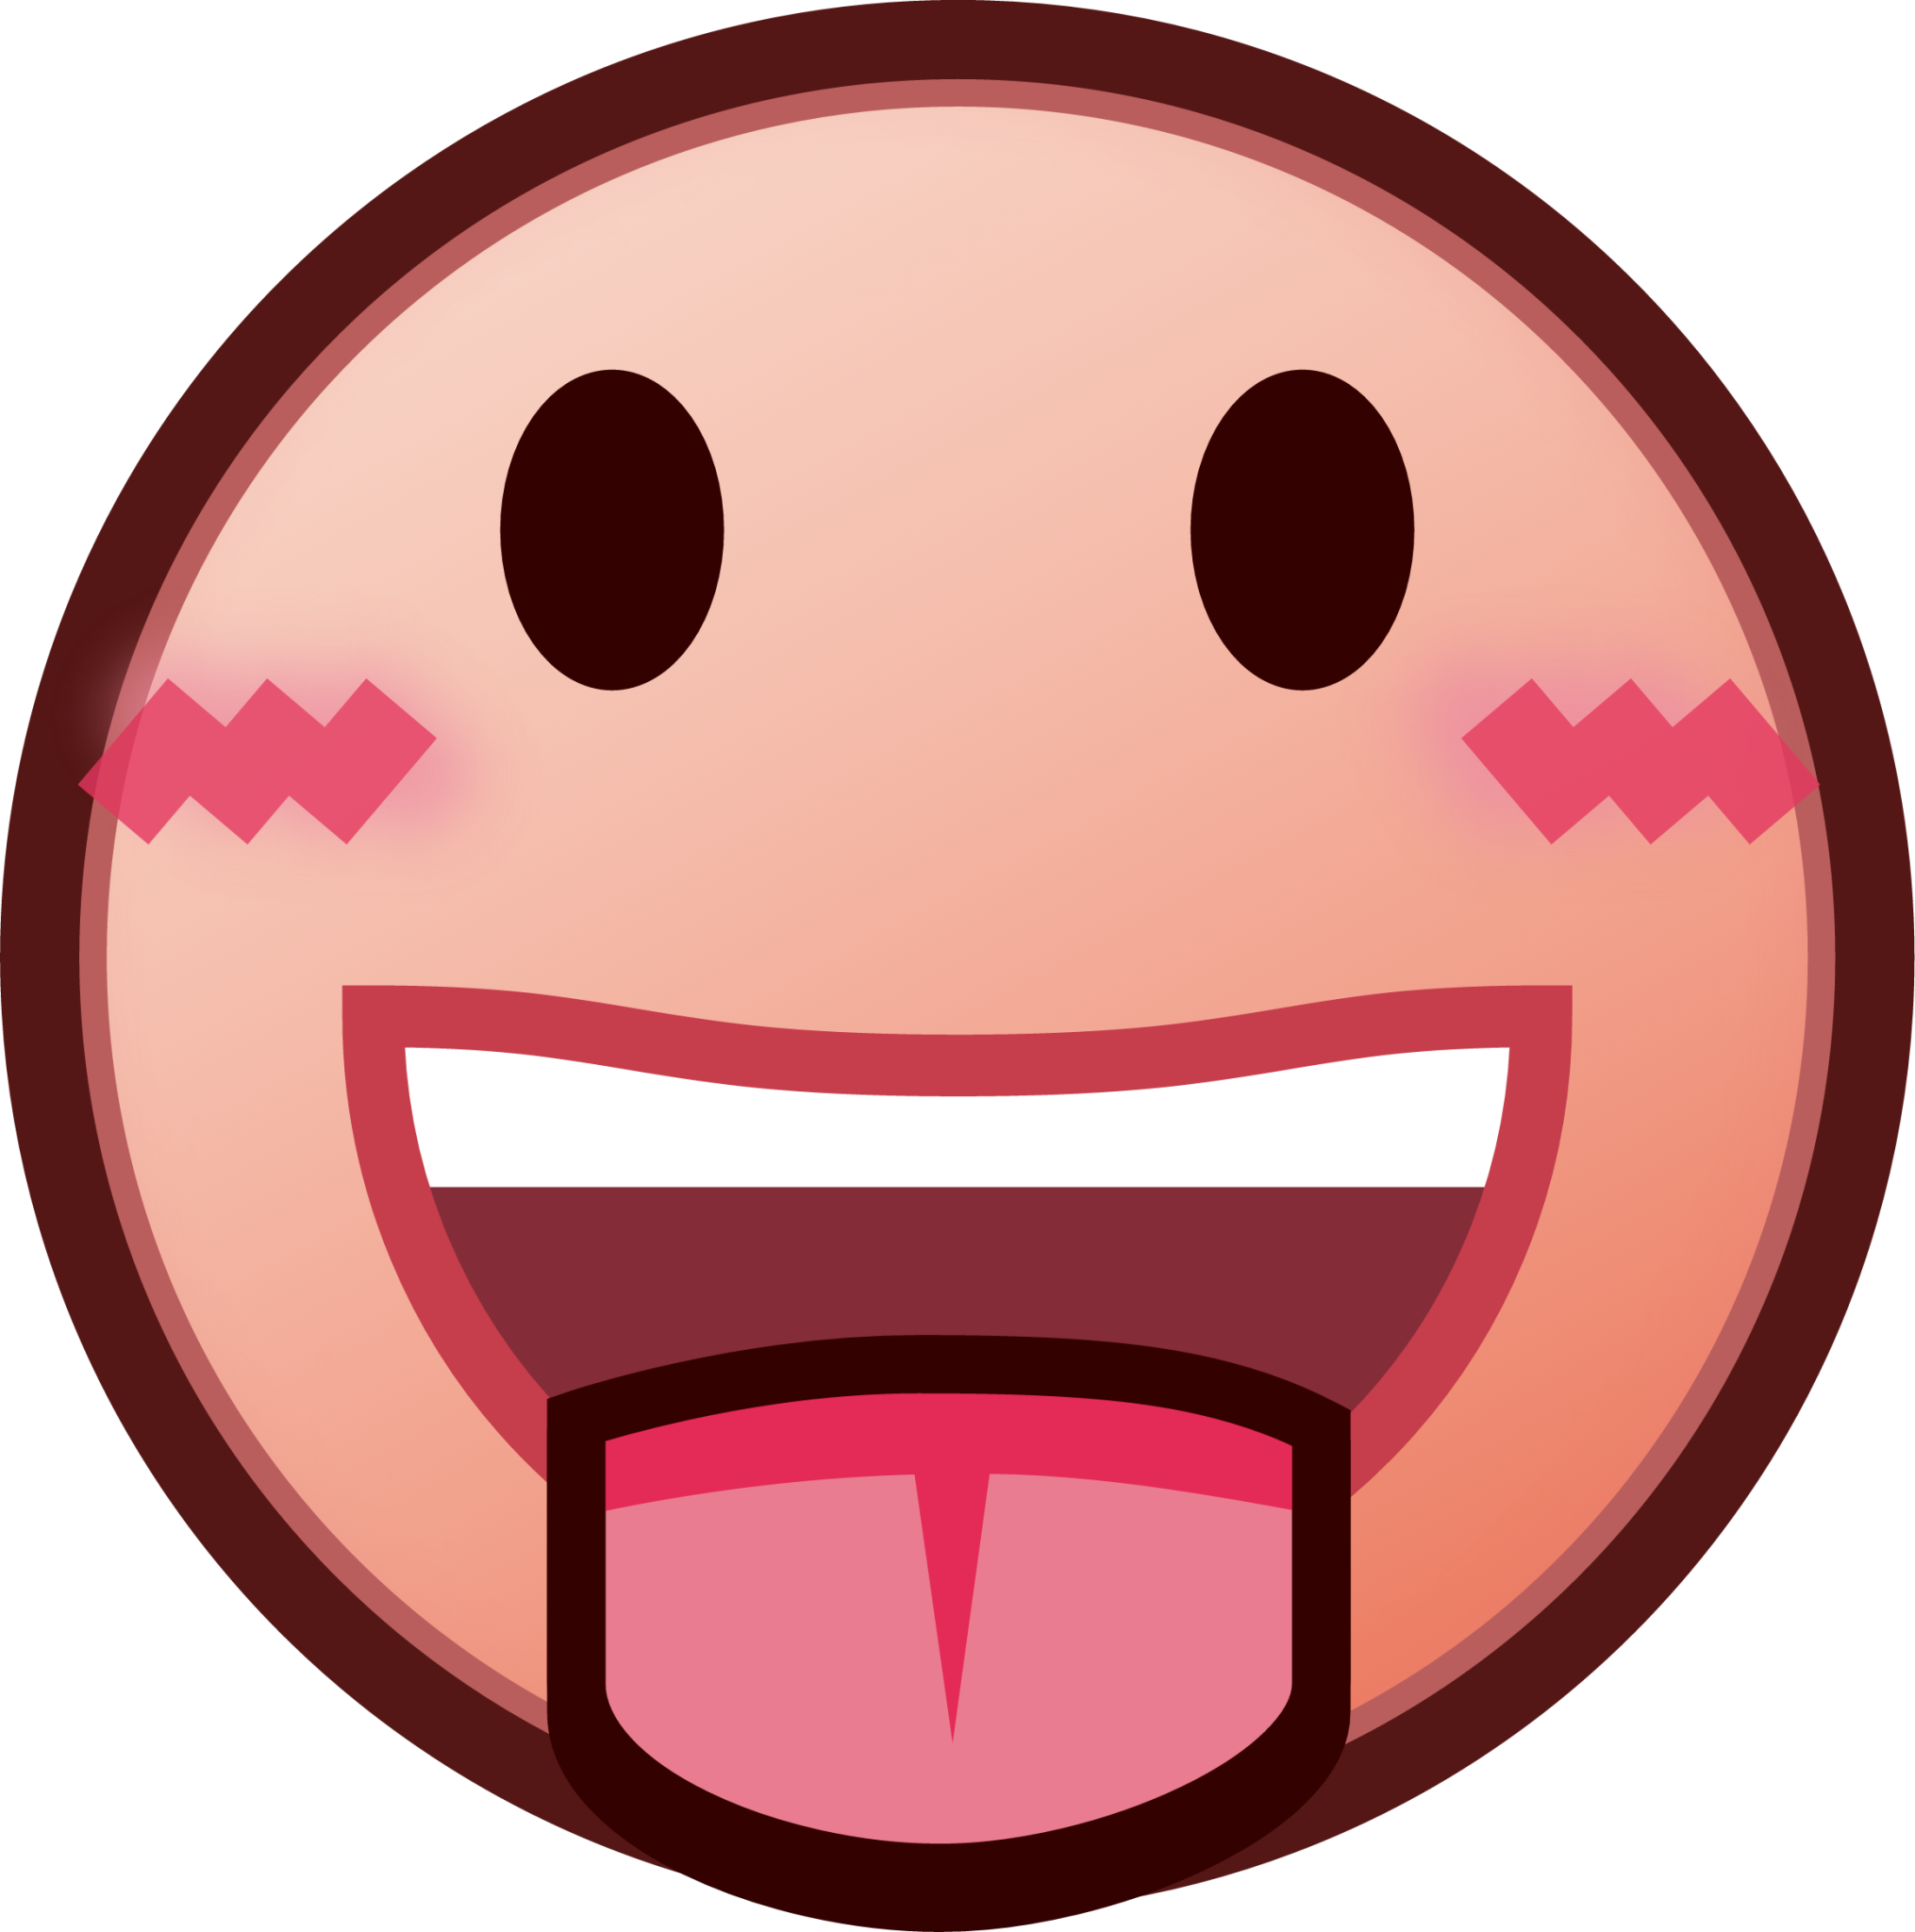 stuck out tongue (plain) emoji